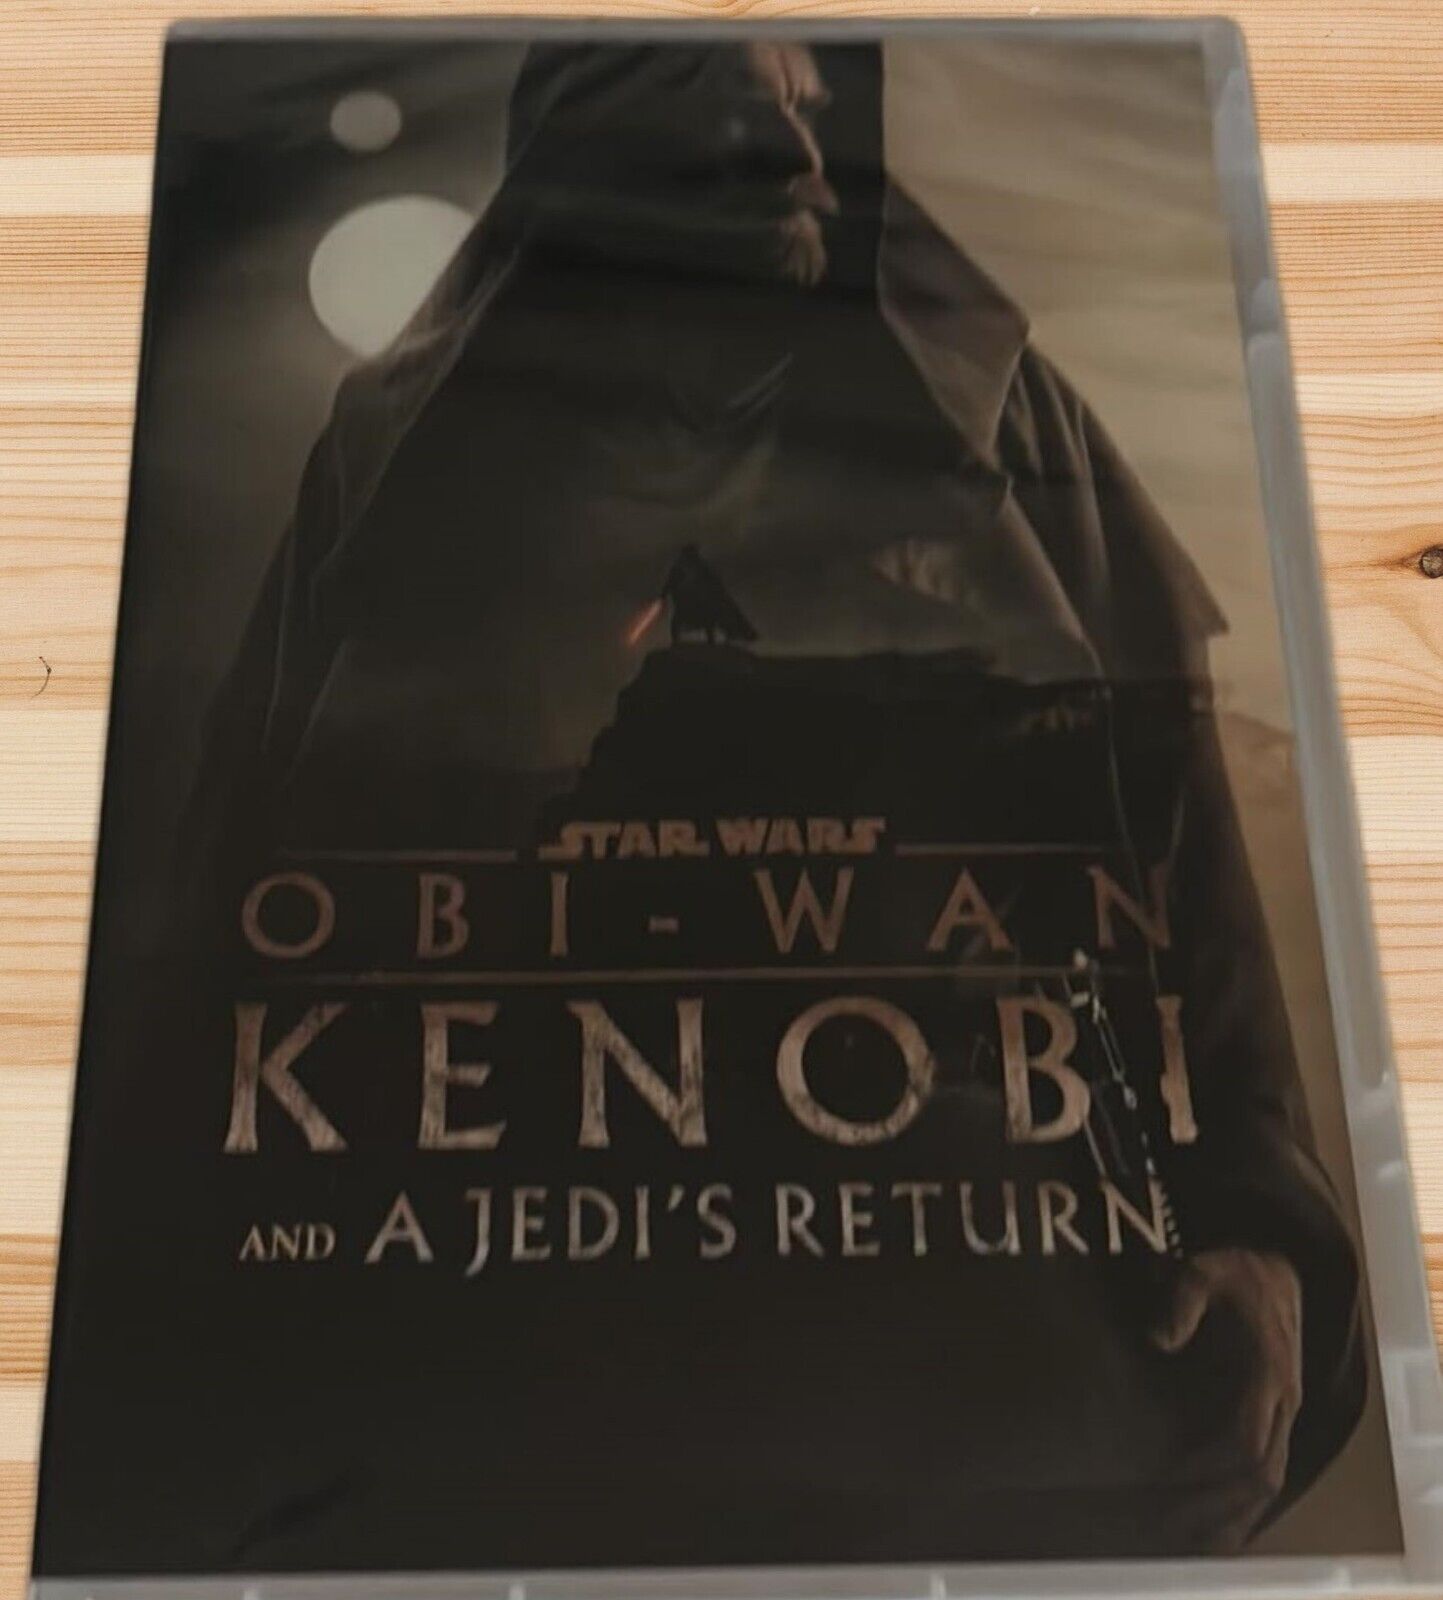 Star Wars, Obi-Wan Kenobi: The Complete Season 1 ( DVD) Free Delivery